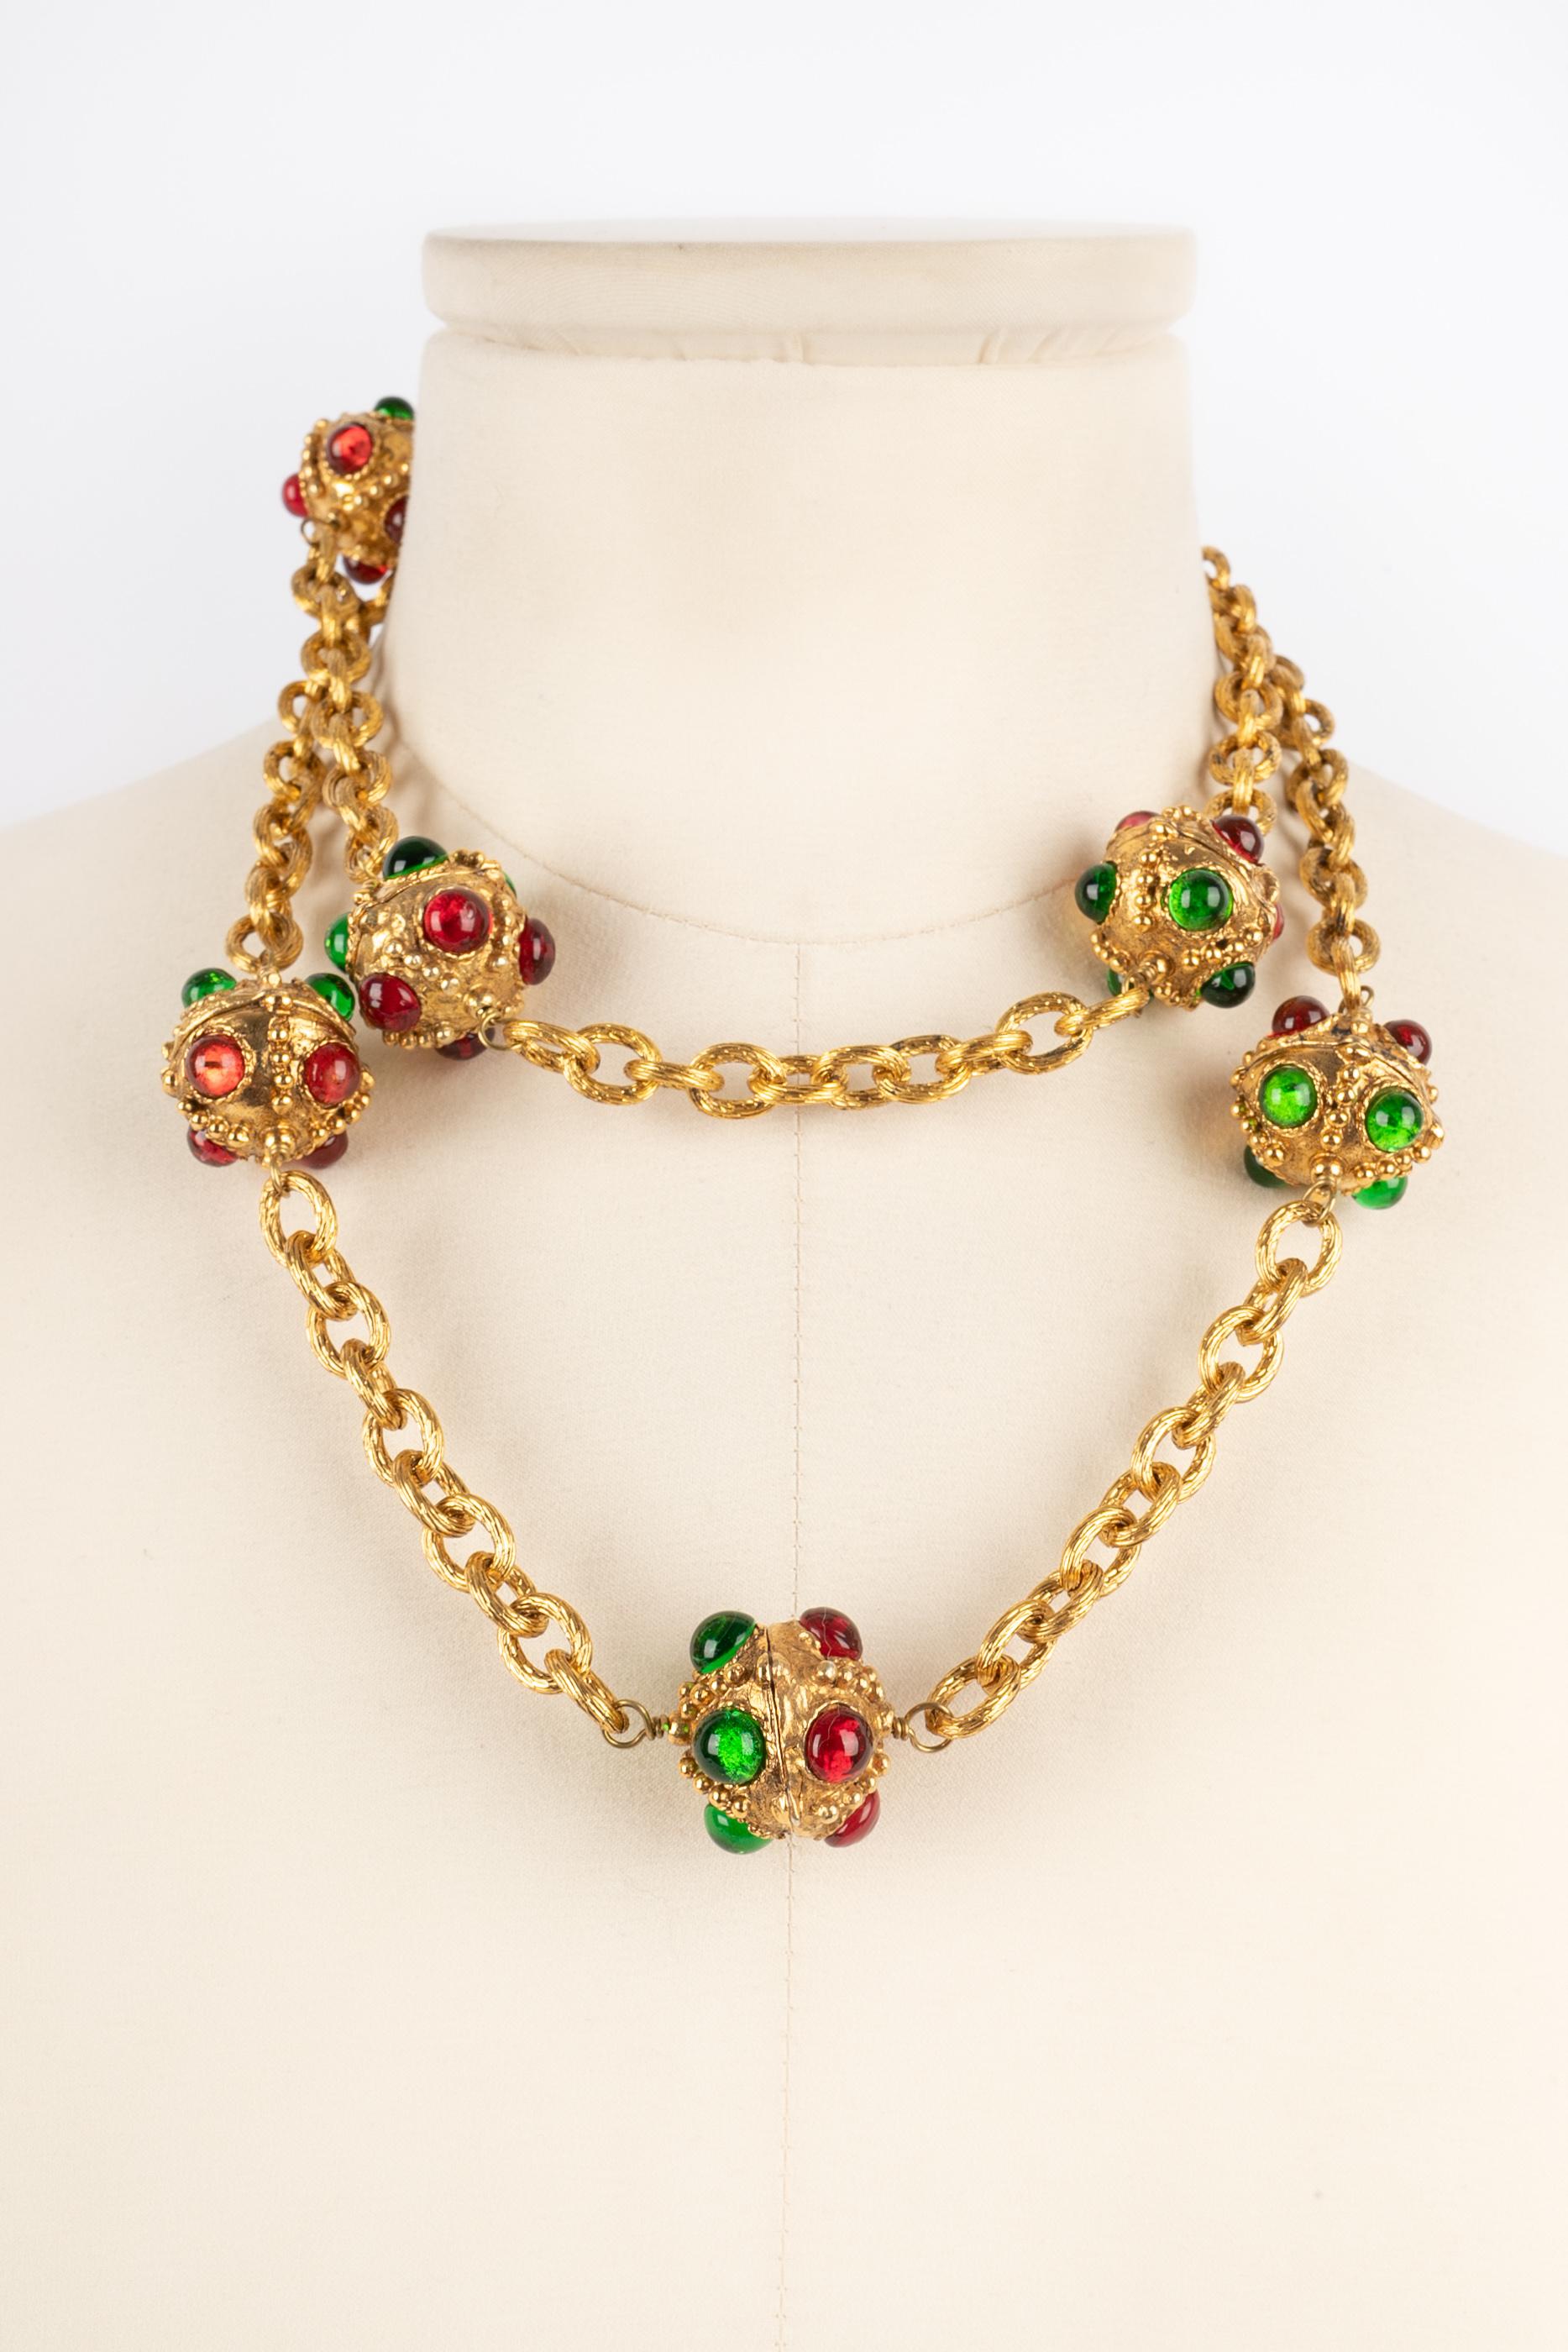 Chanel Byzantine necklace 9